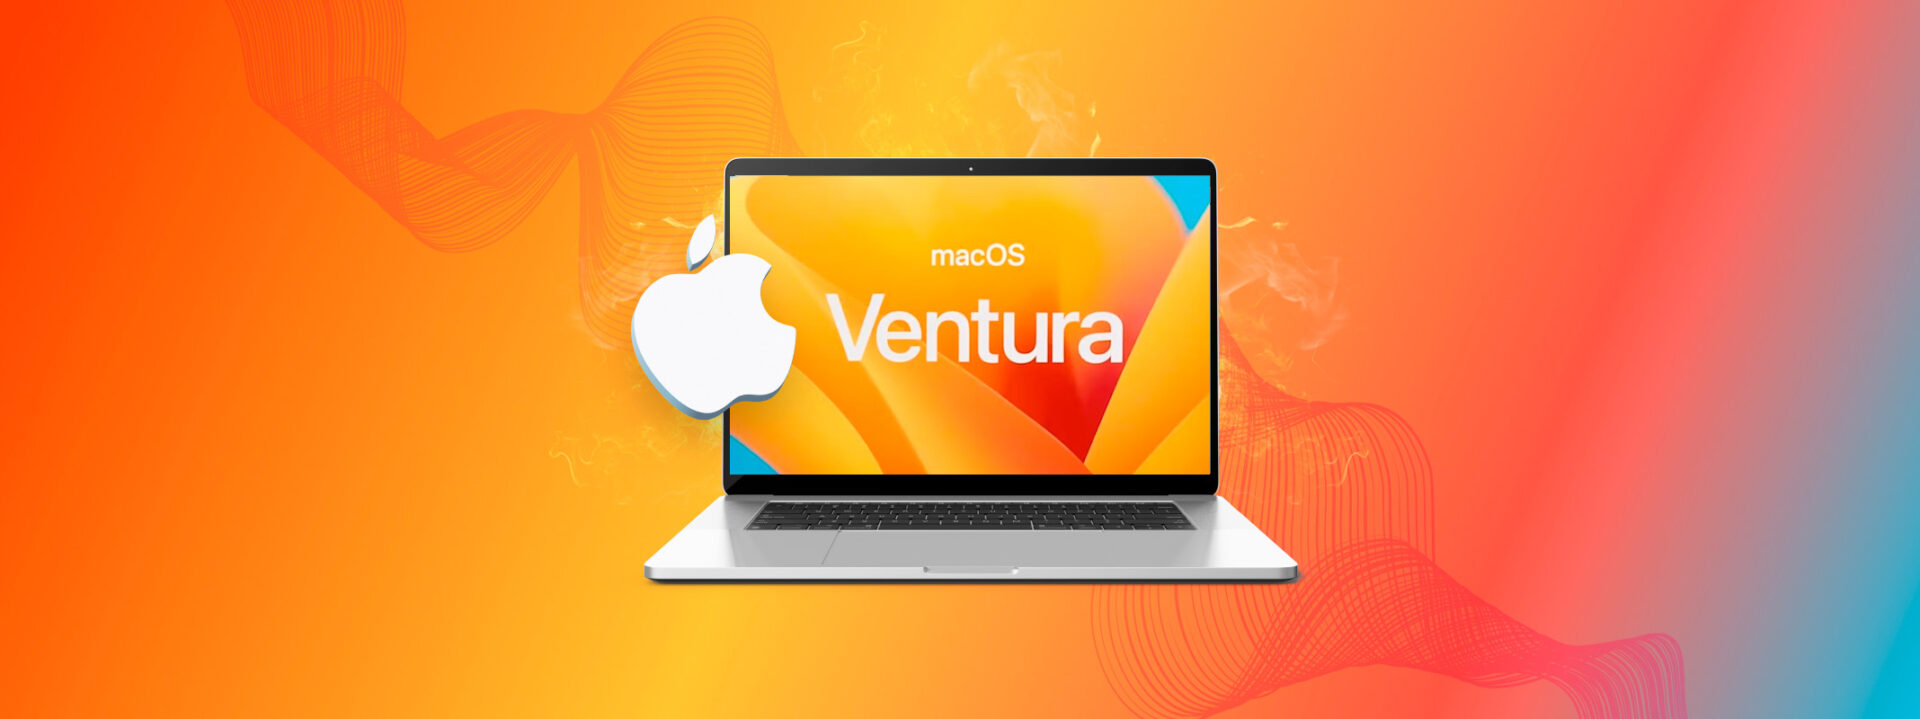 download the last version for apple Ventura